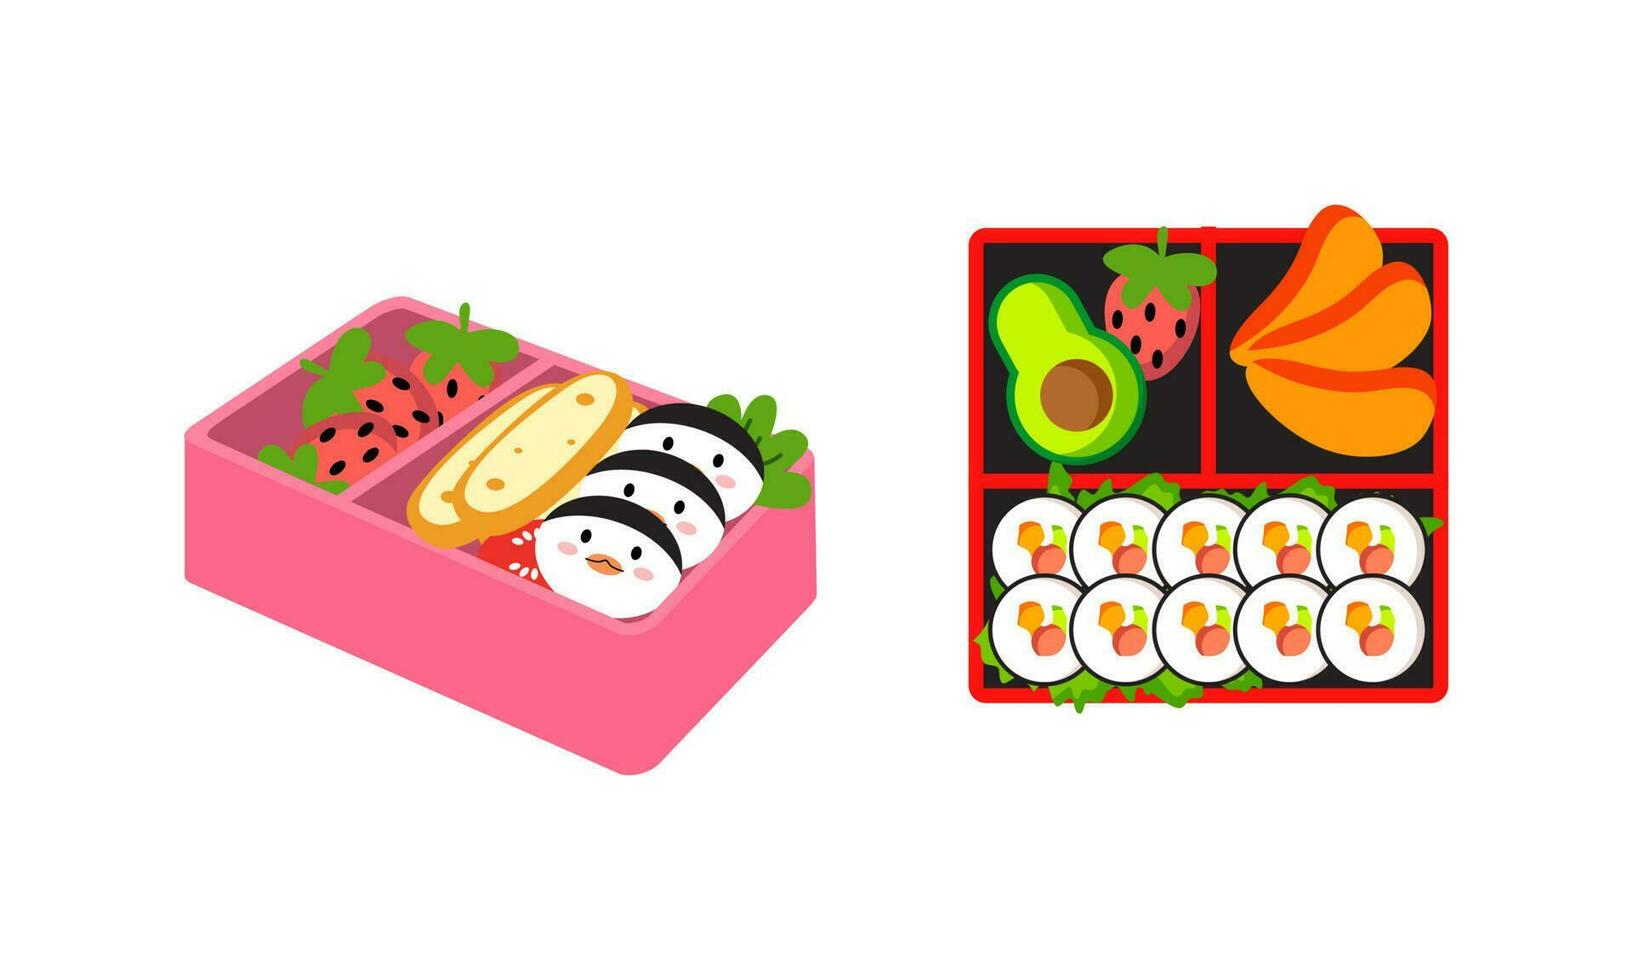 Bento box logo. Japanese lunch box. Various traditional asian food cartoon style vector